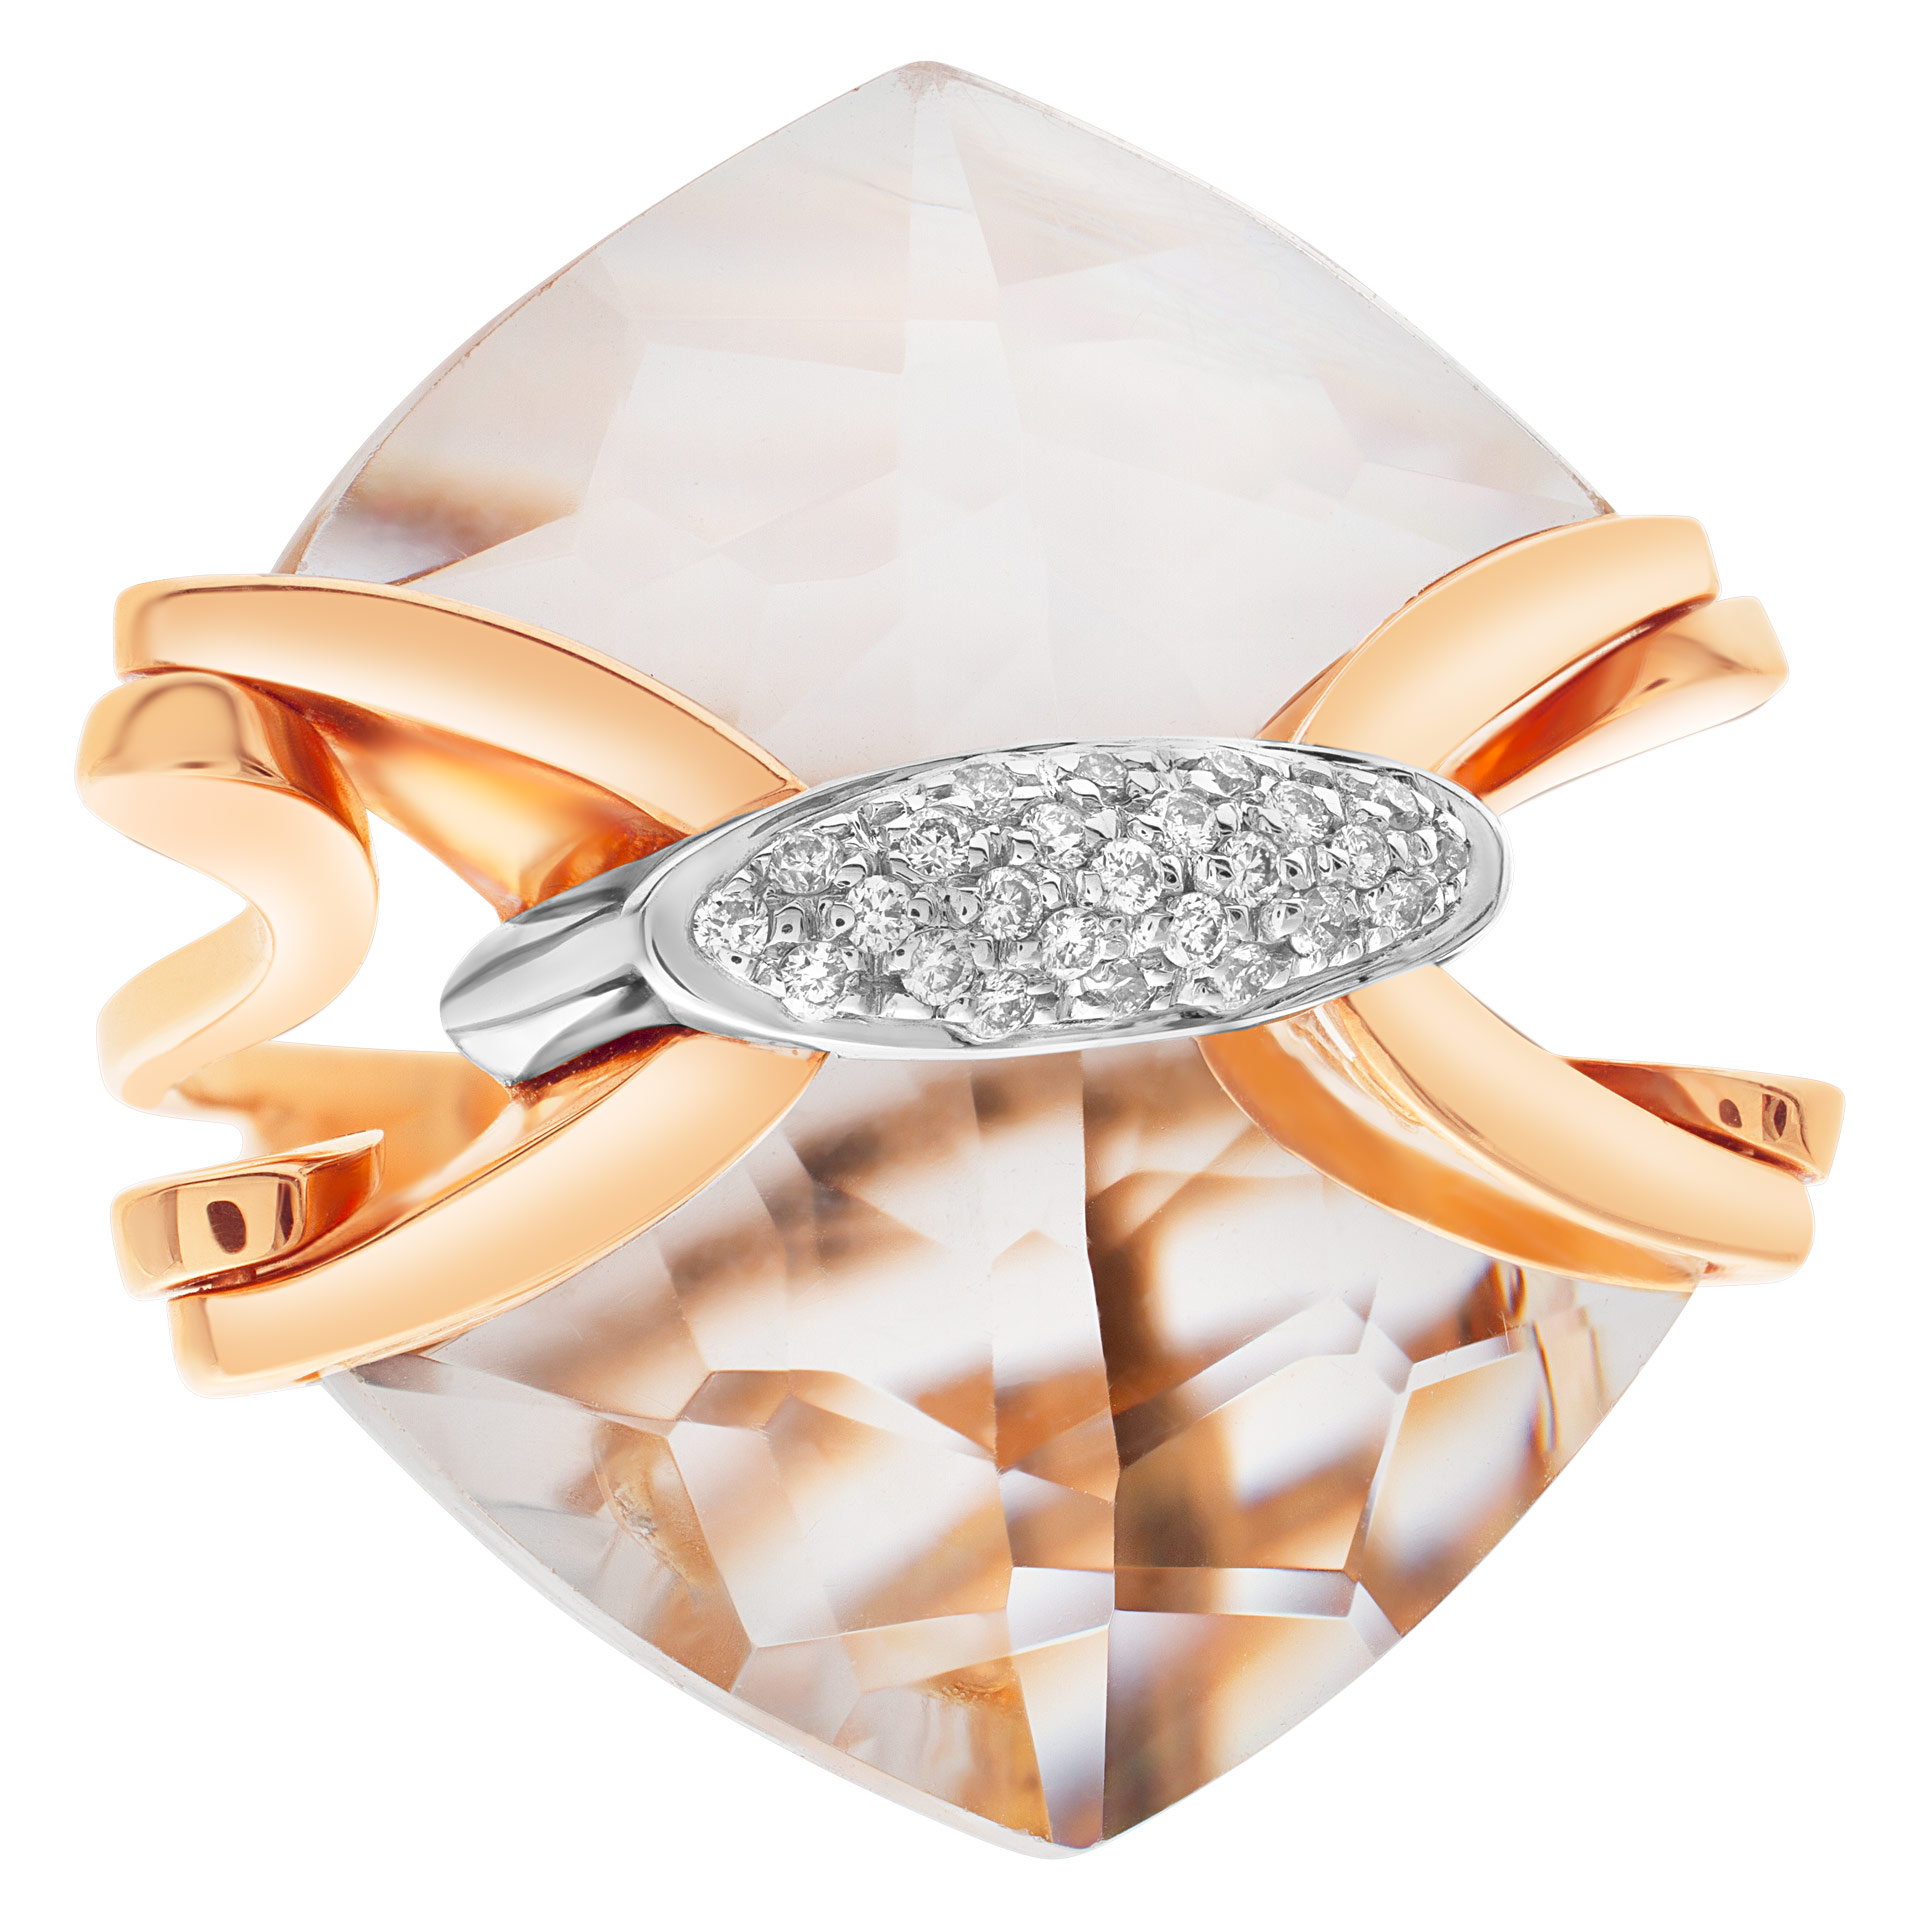 Mesmerizing quartz & diamonds ring by Italian designer "Falcinelli", w 17 carats "arrow"  shape cut quartz & diamonds.